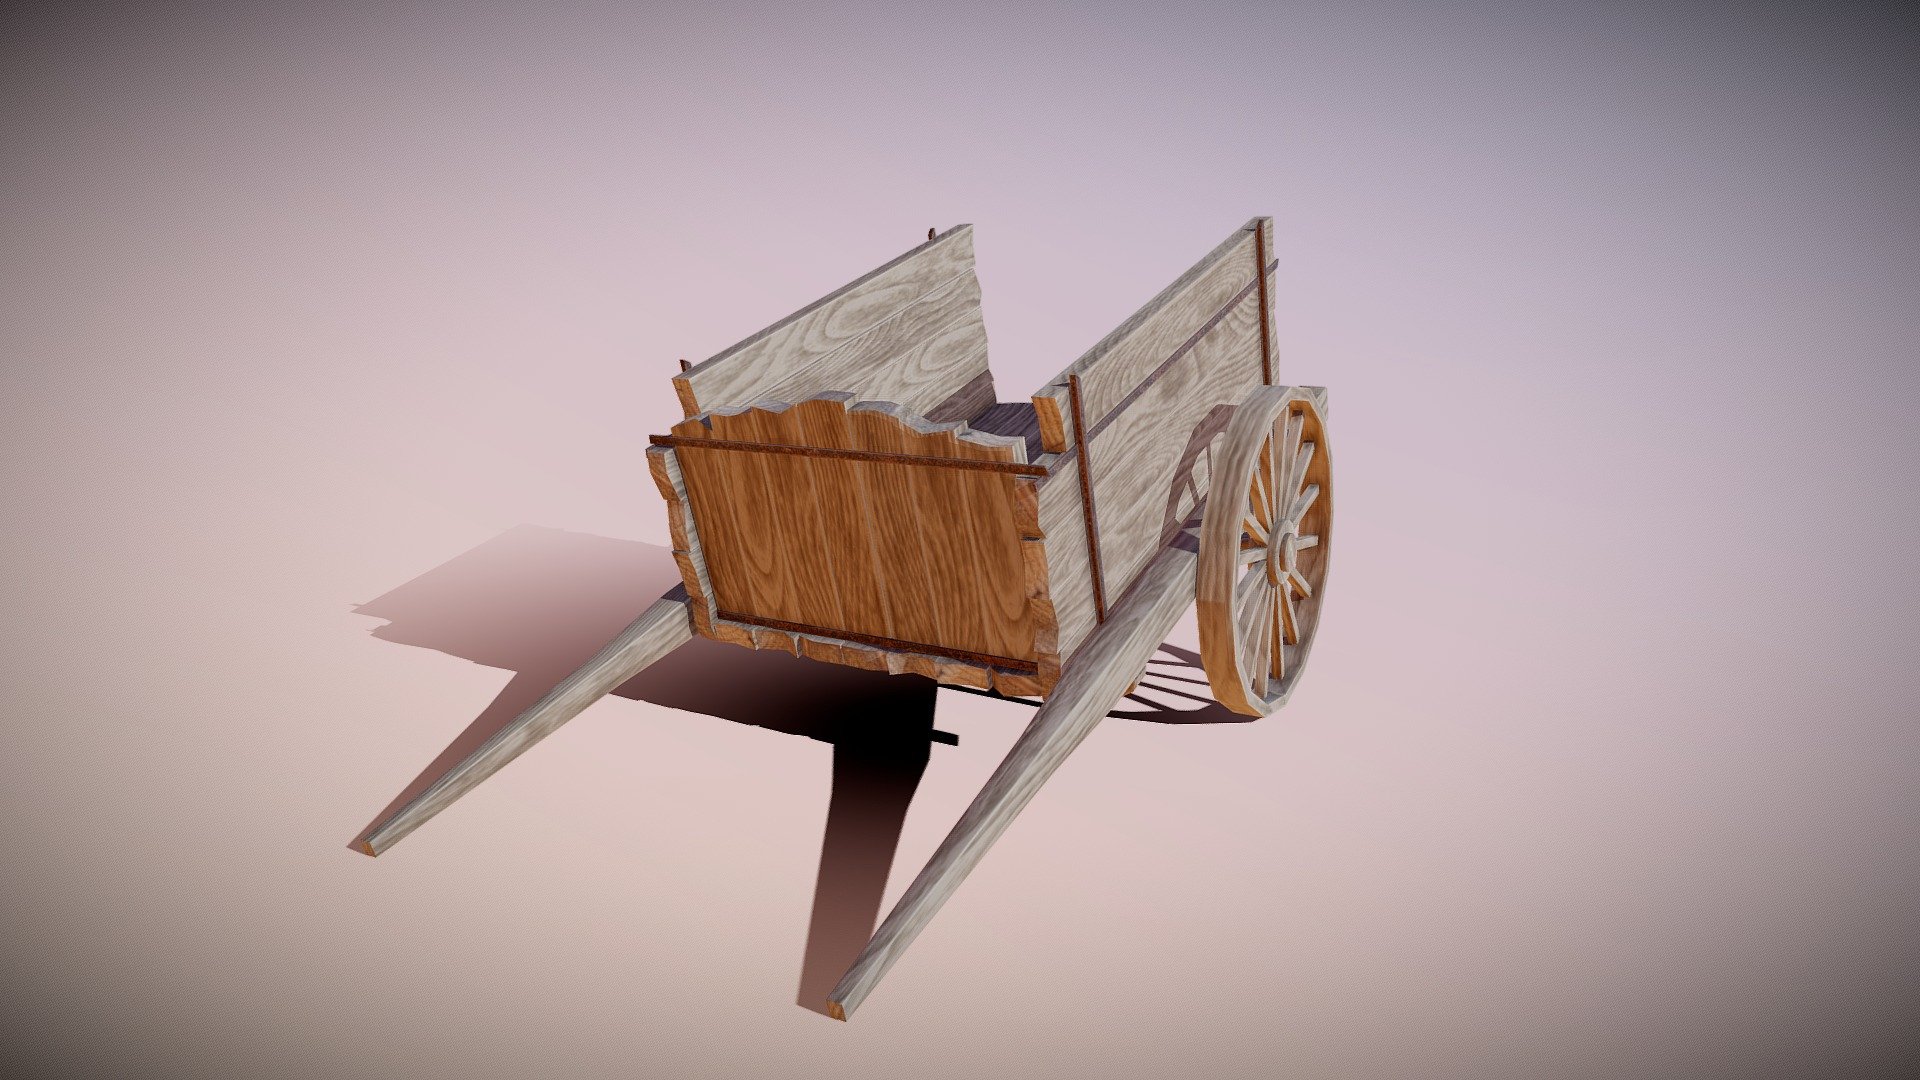 Medieval Cart